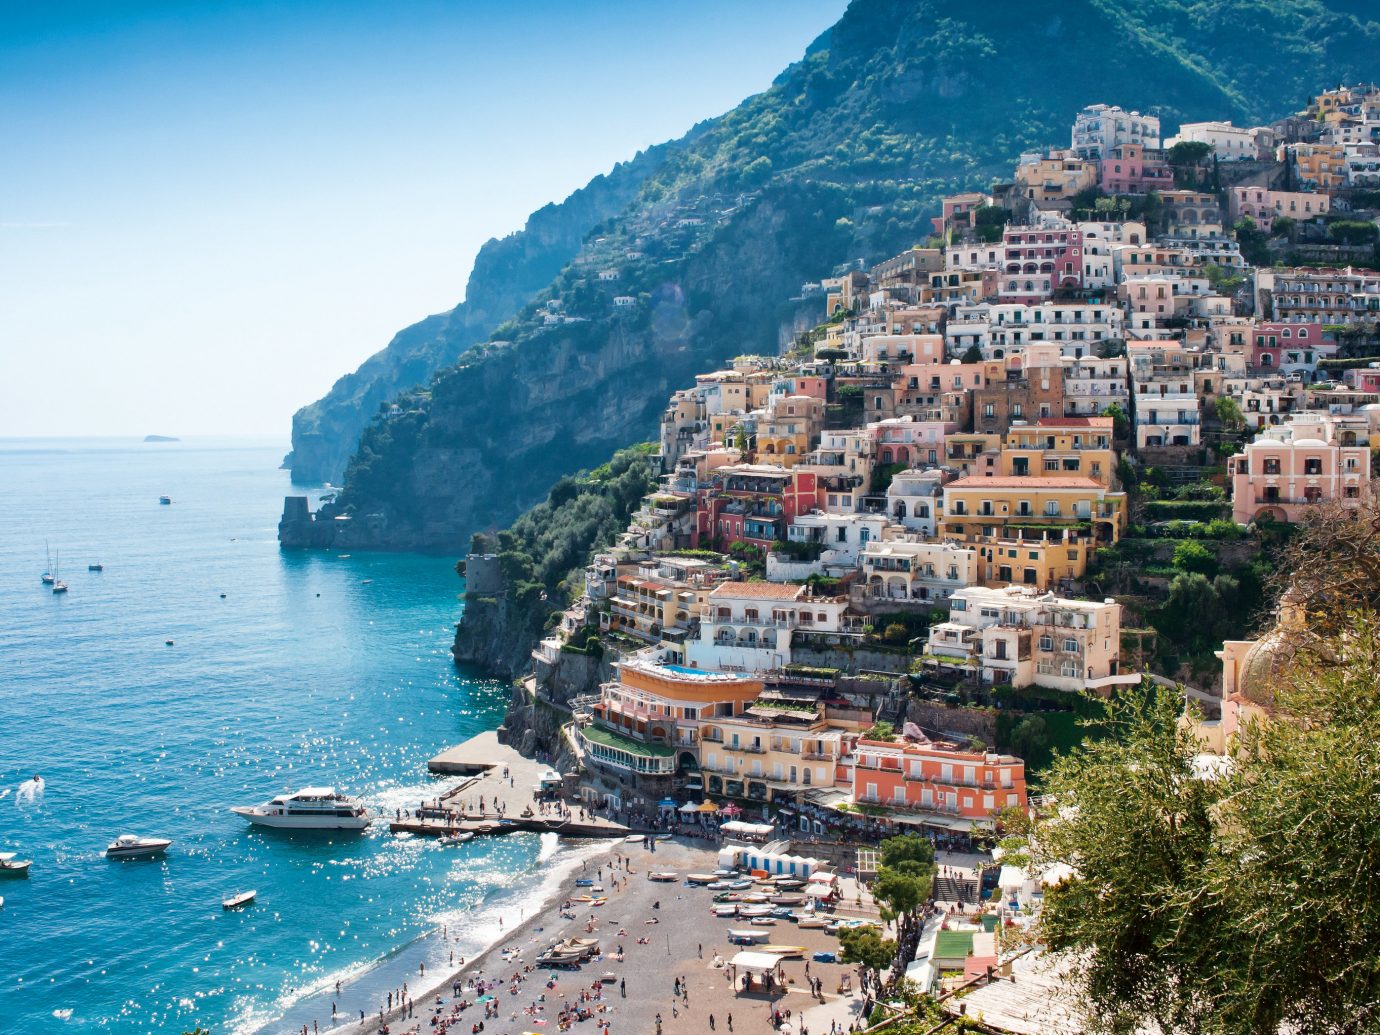 Amalfi Coast from the Belmond hotel in Italy